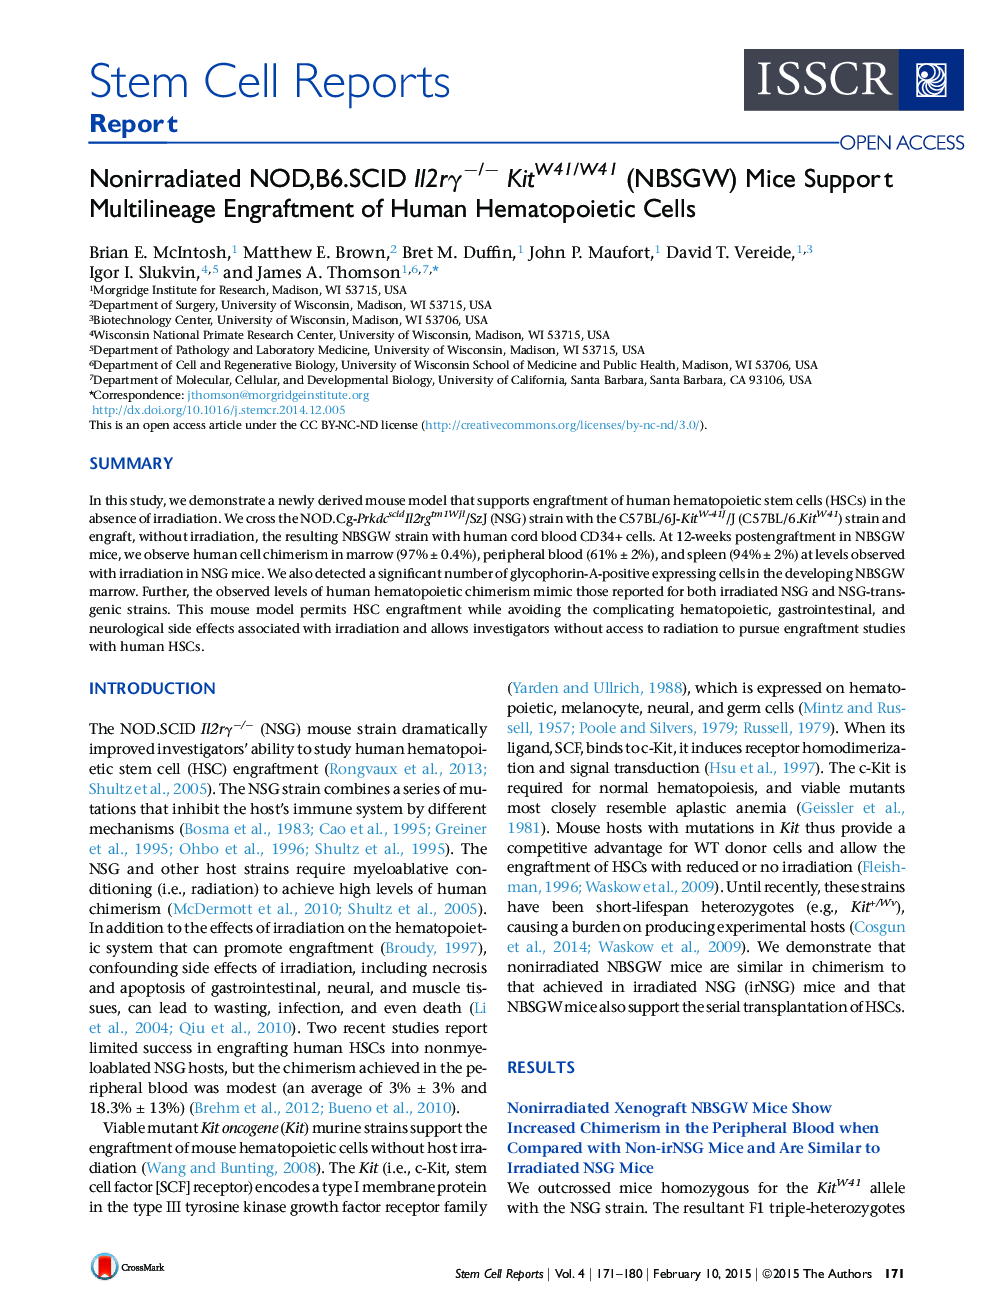 Nonirradiated NOD,B6.SCID Il2rγ−/−KitW41/W41 (NBSGW) Mice Support Multilineage Engraftment of Human Hematopoietic Cells 